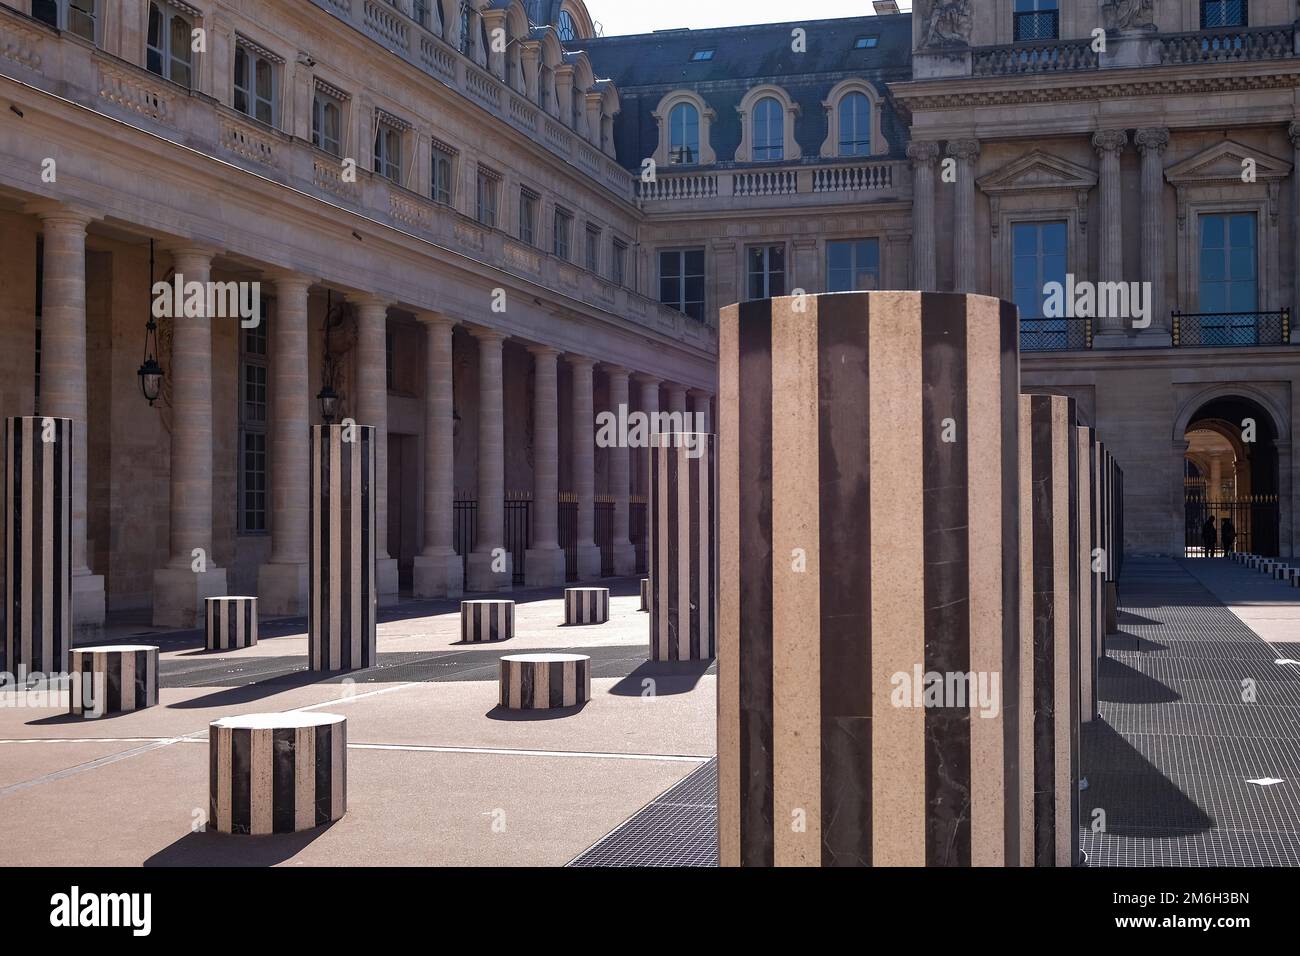 Junge Leute in den Columns of the Palais Royal in Paris, Frankreich - Mode, Influencer, Natur Stockfoto